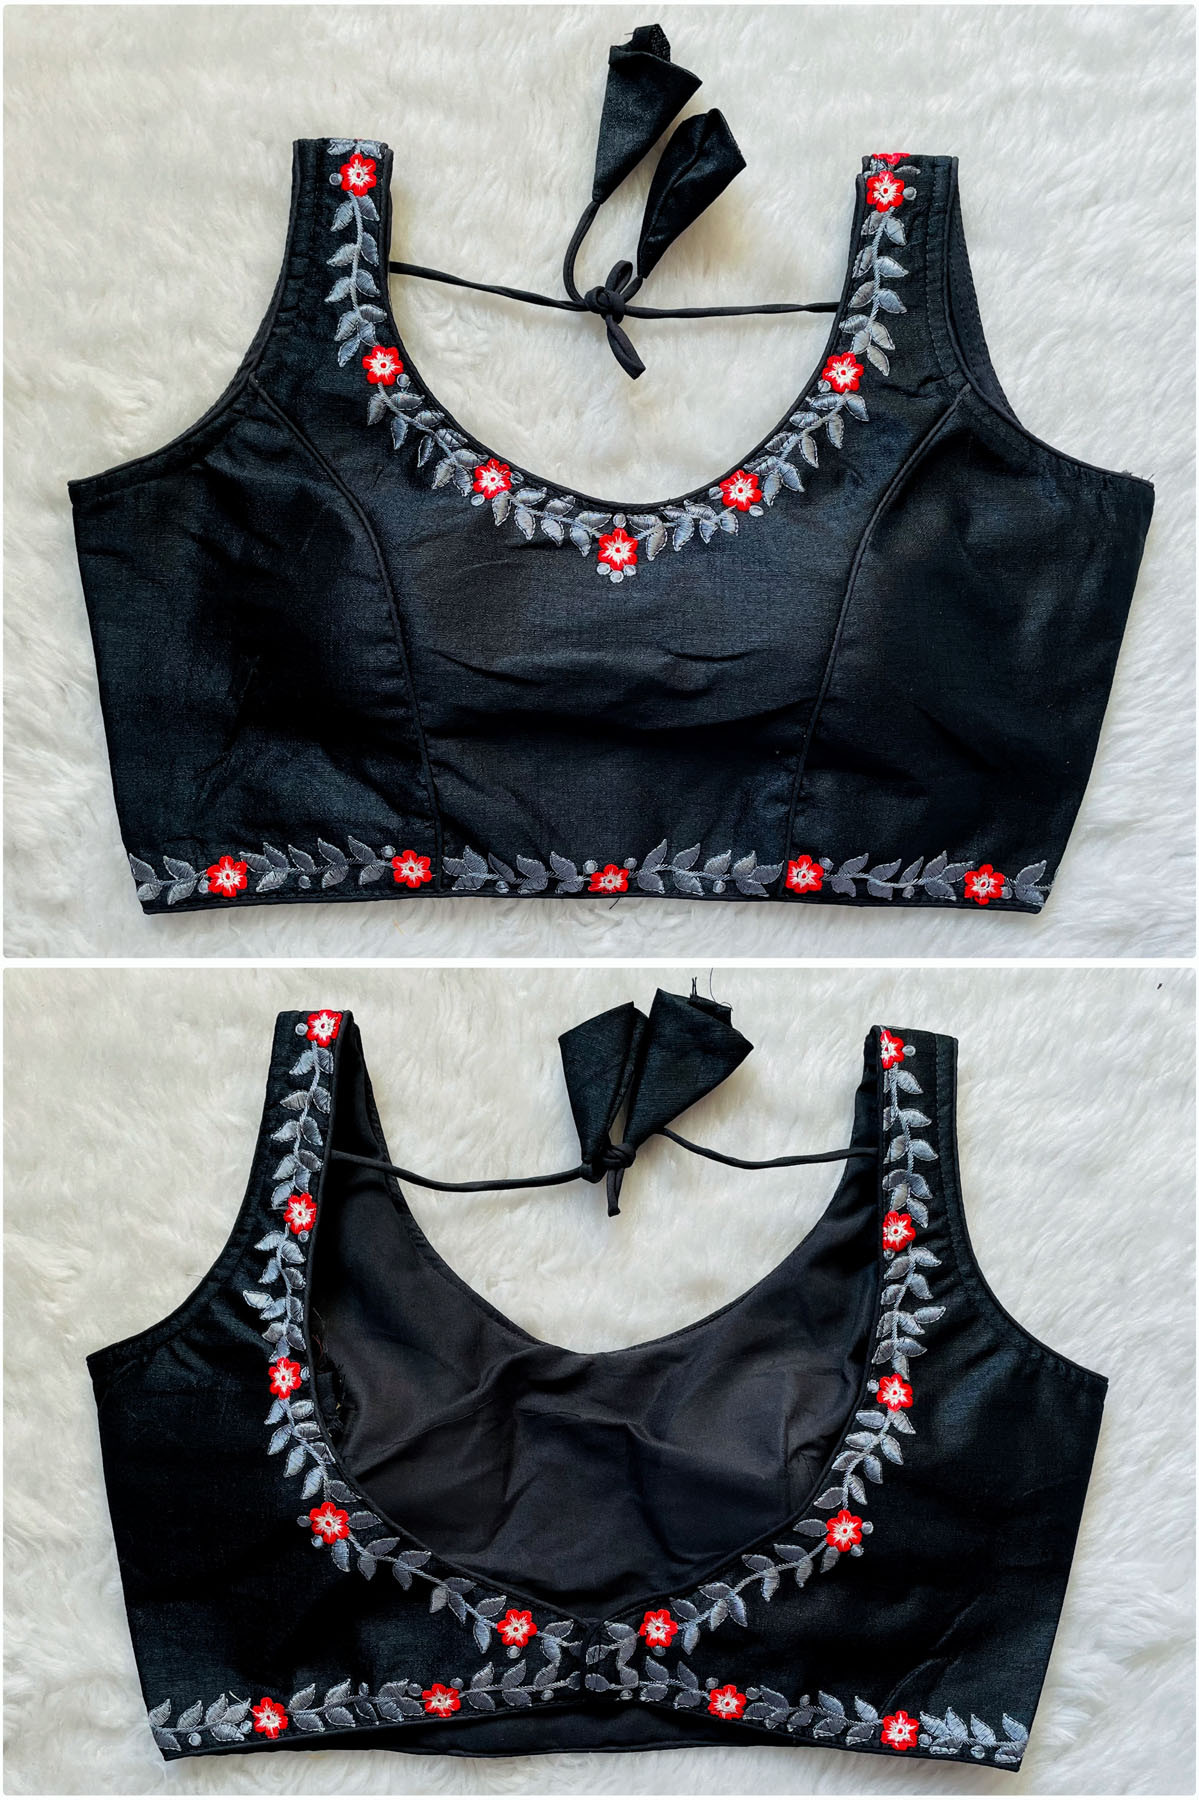 Embroidered Phantom Silk Designer Blouse - Black(3XL)